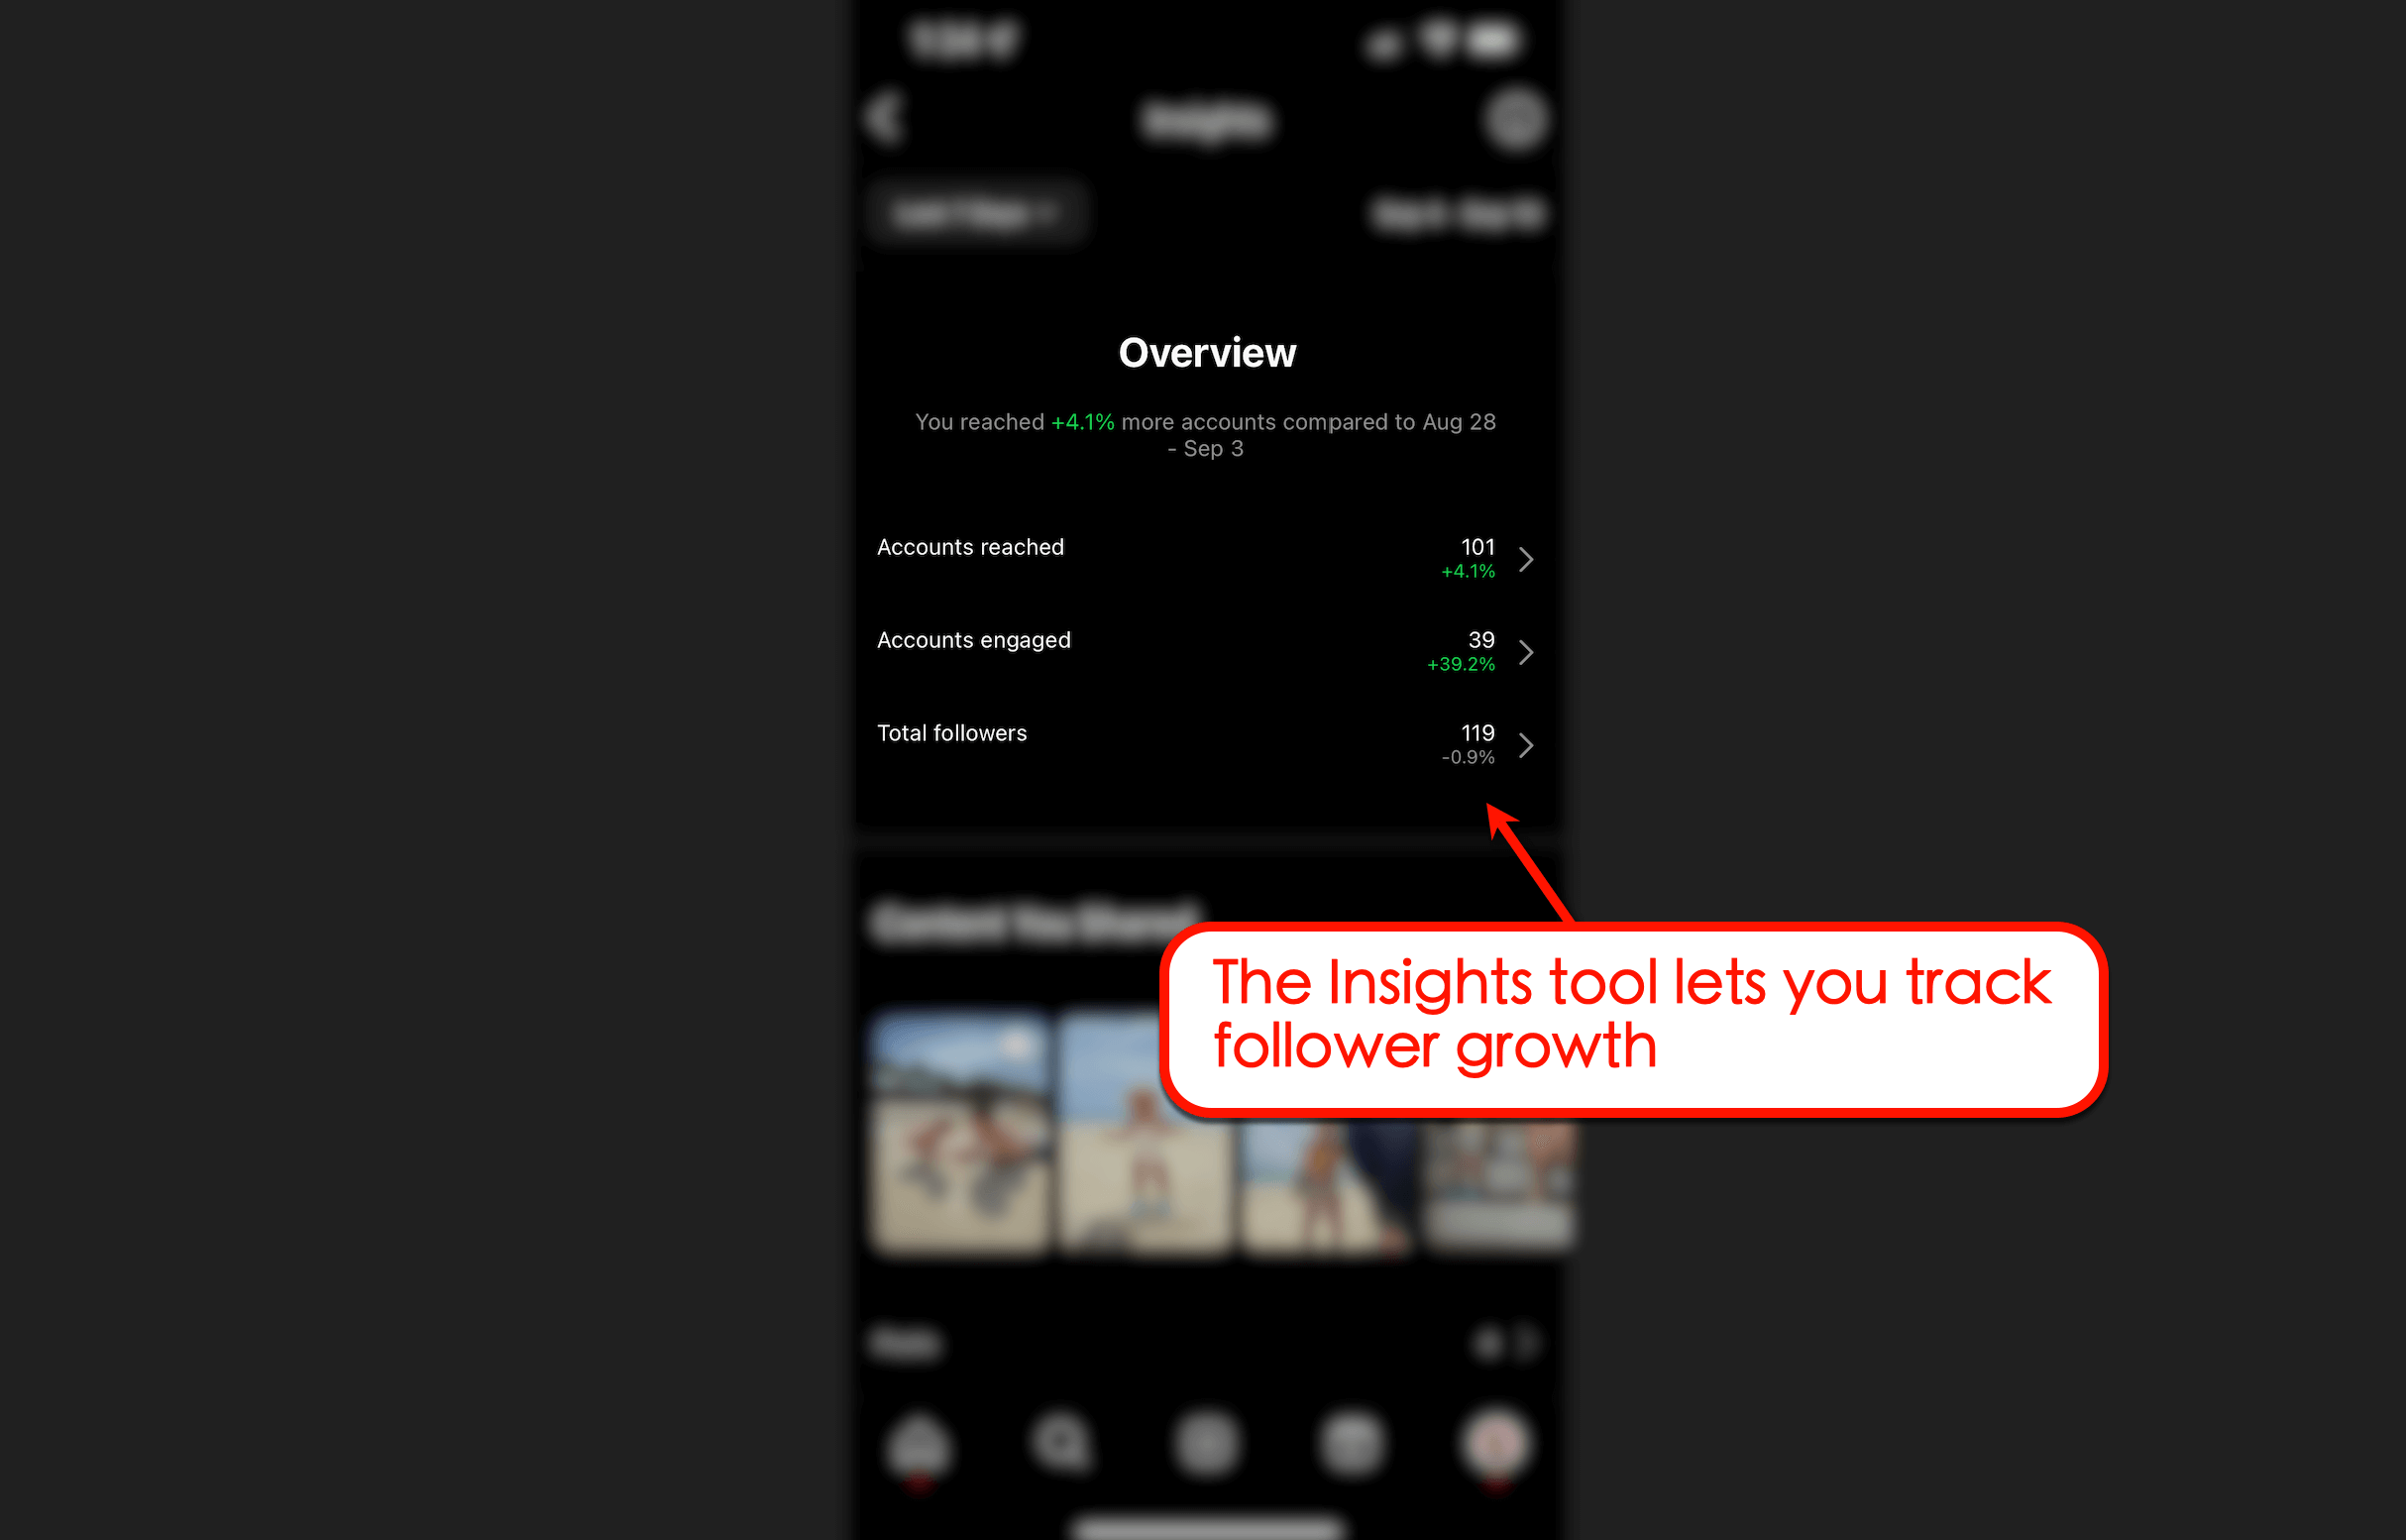 Track follower growth through Insights Tool in Instagram app